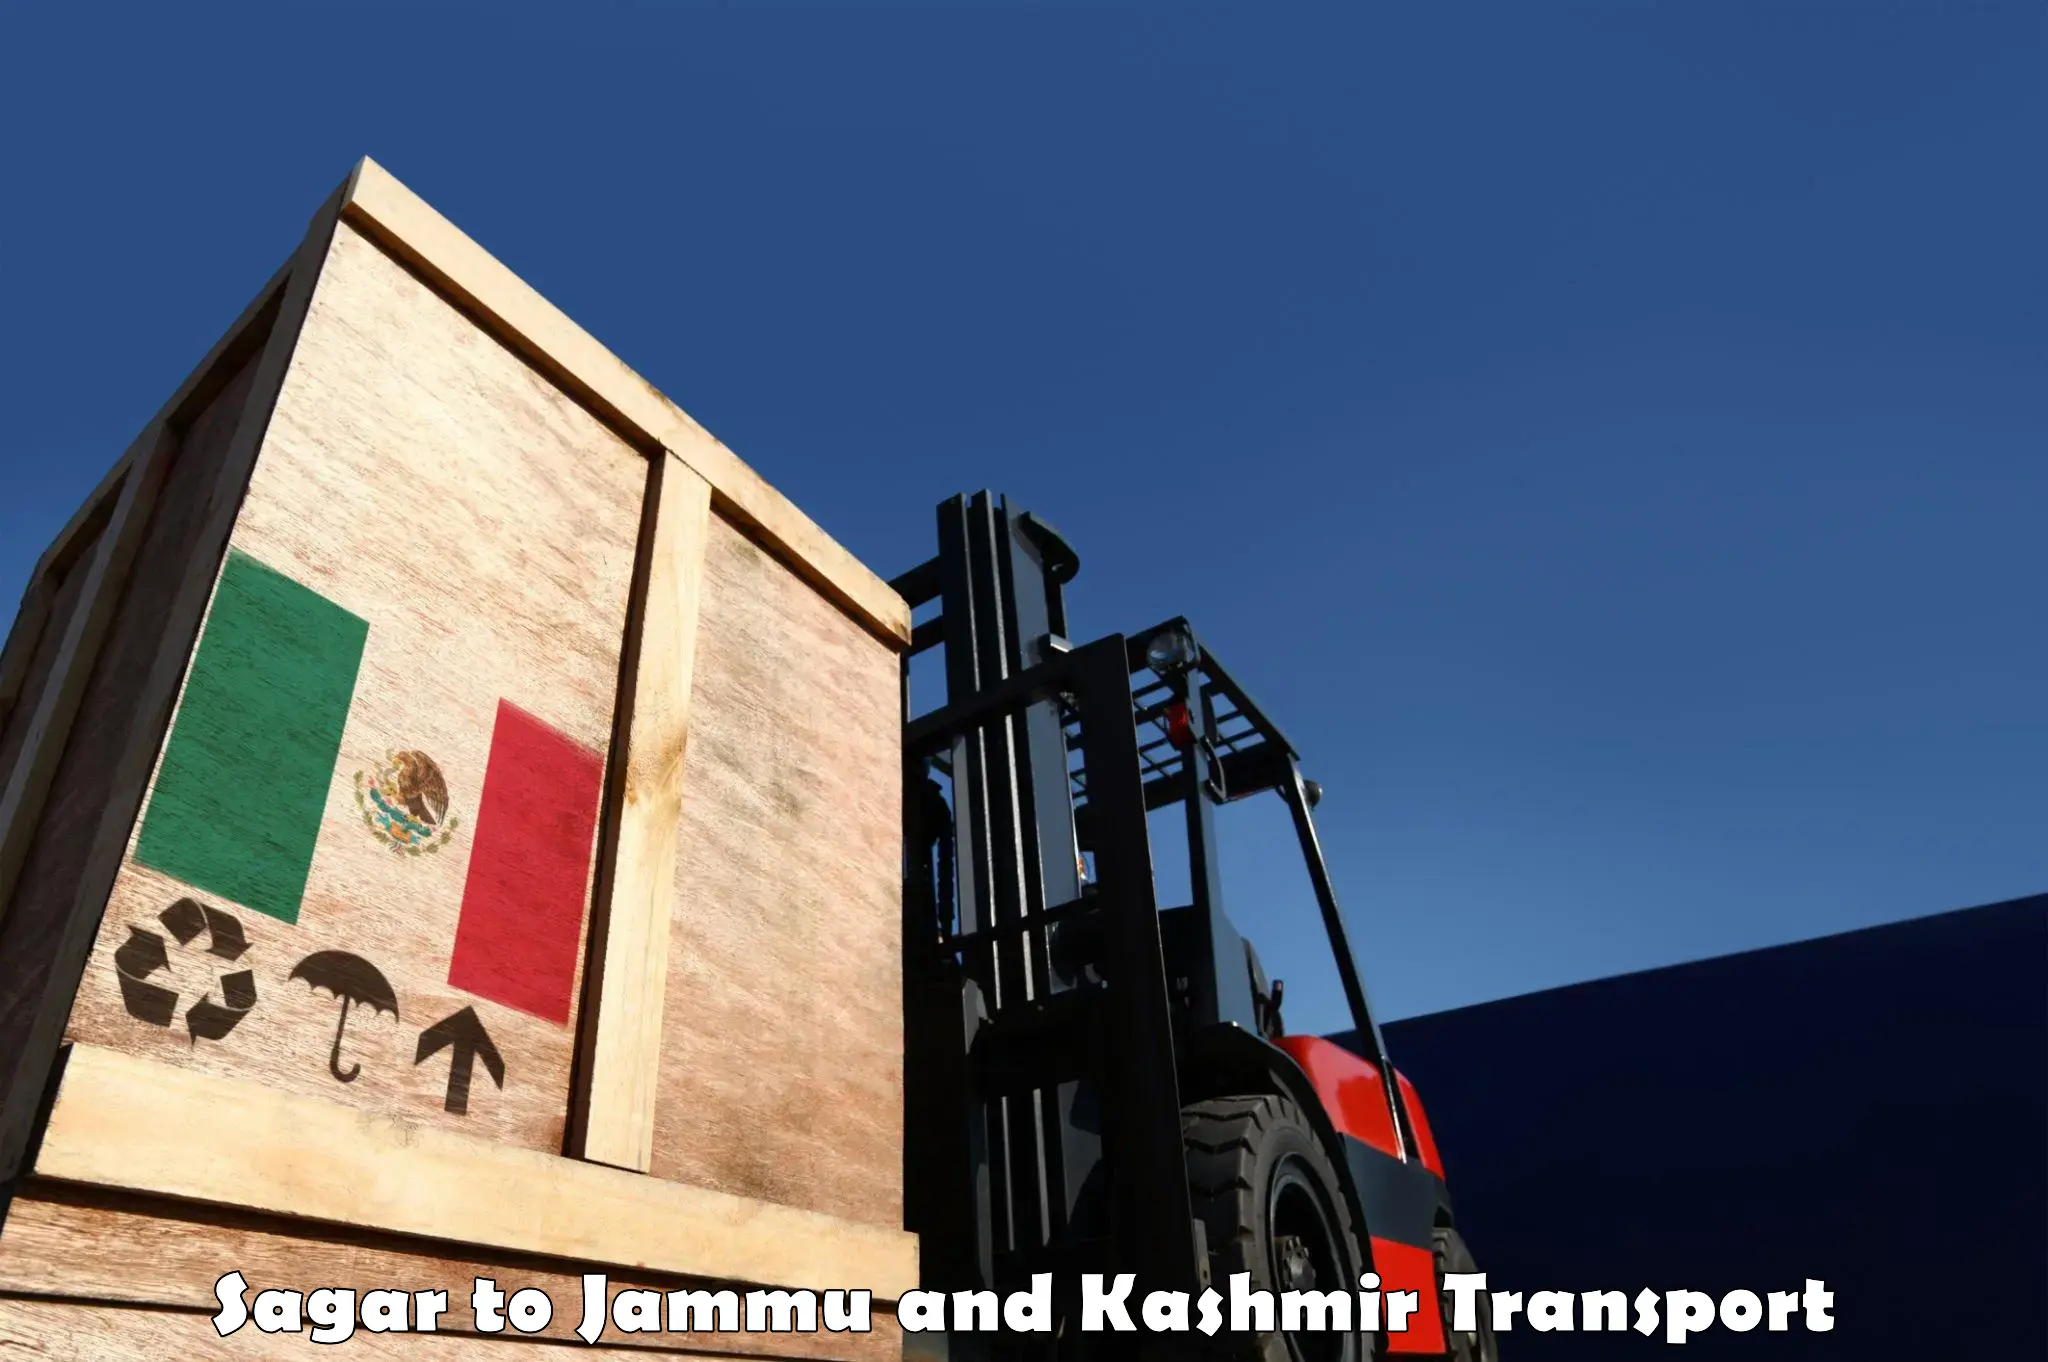 Nearby transport service Sagar to Jammu and Kashmir